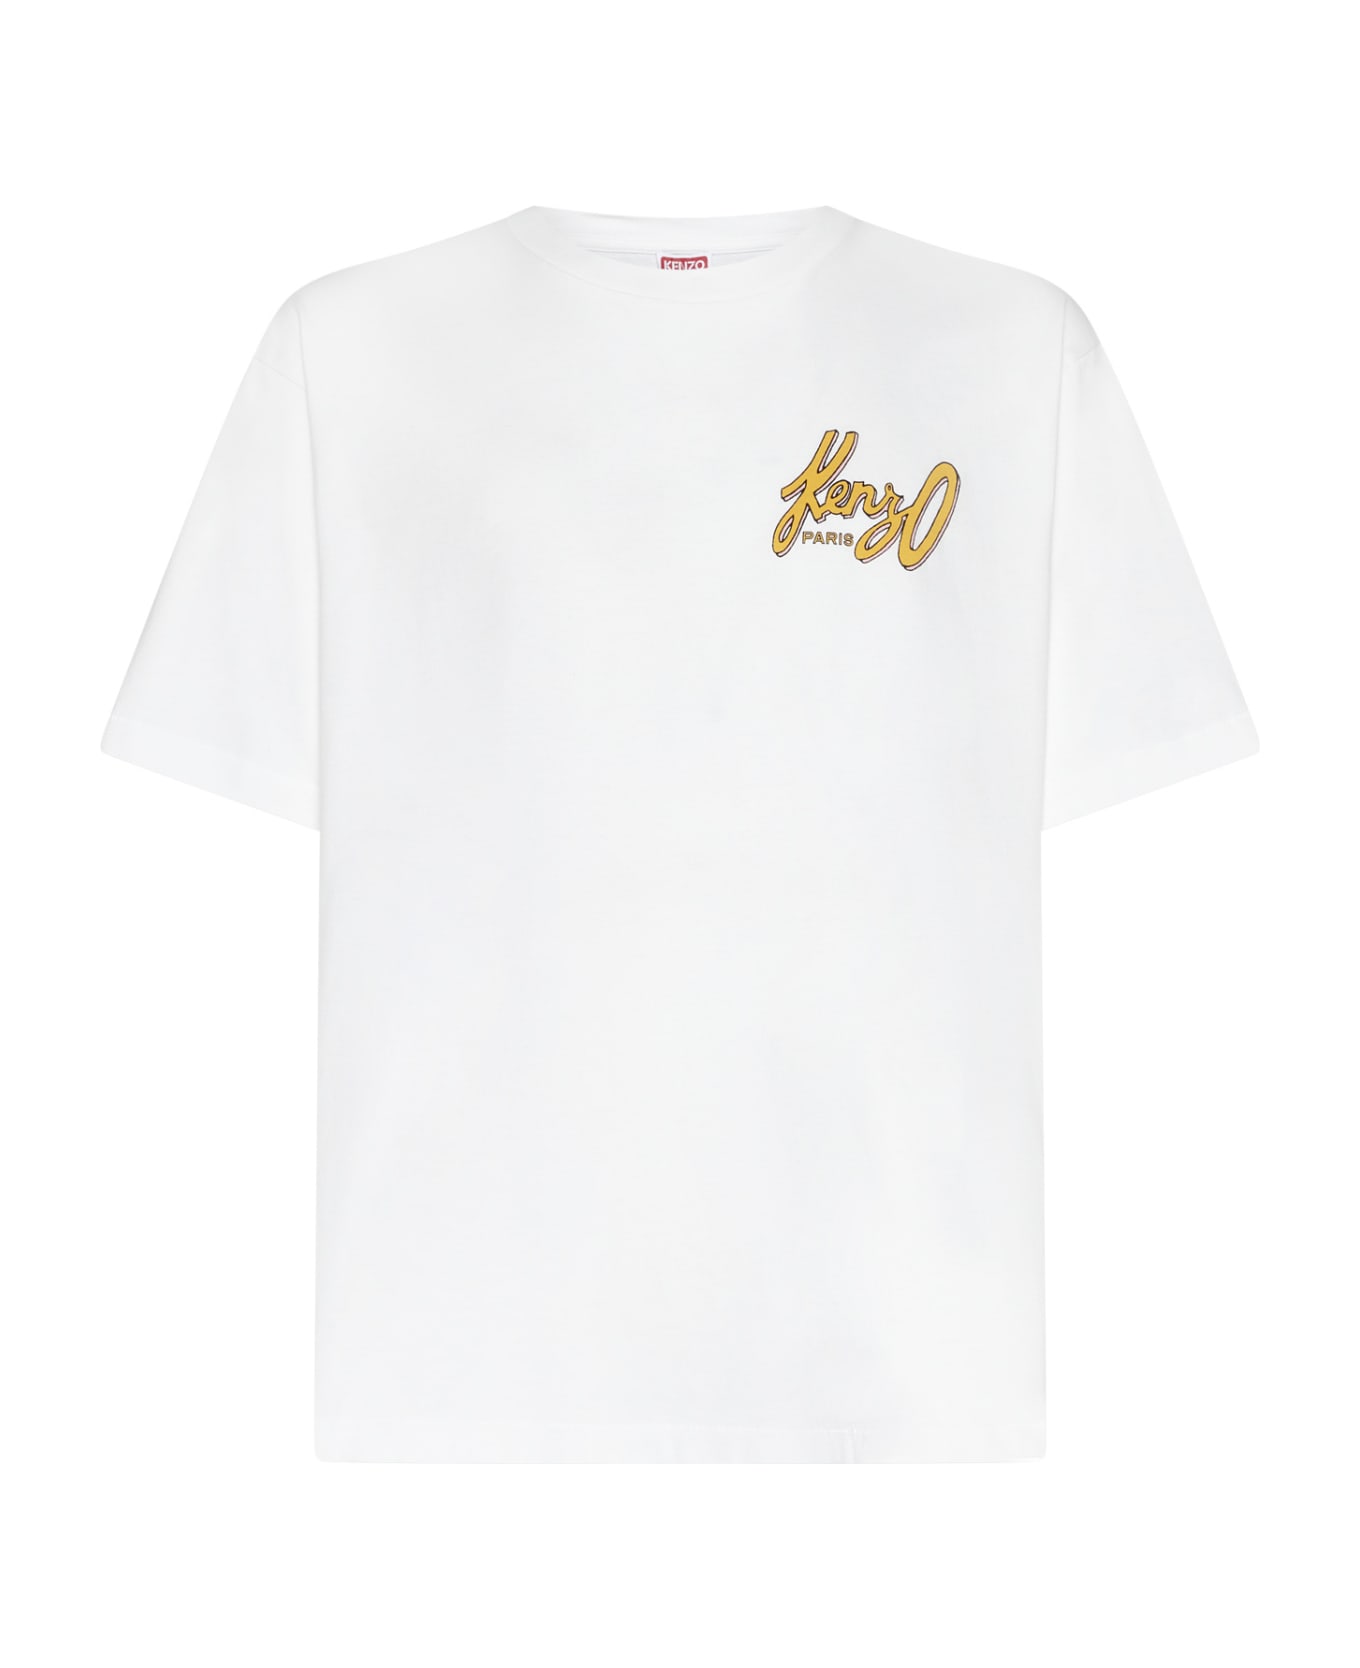 Kenzo Archive Logo T-shirt - Off White